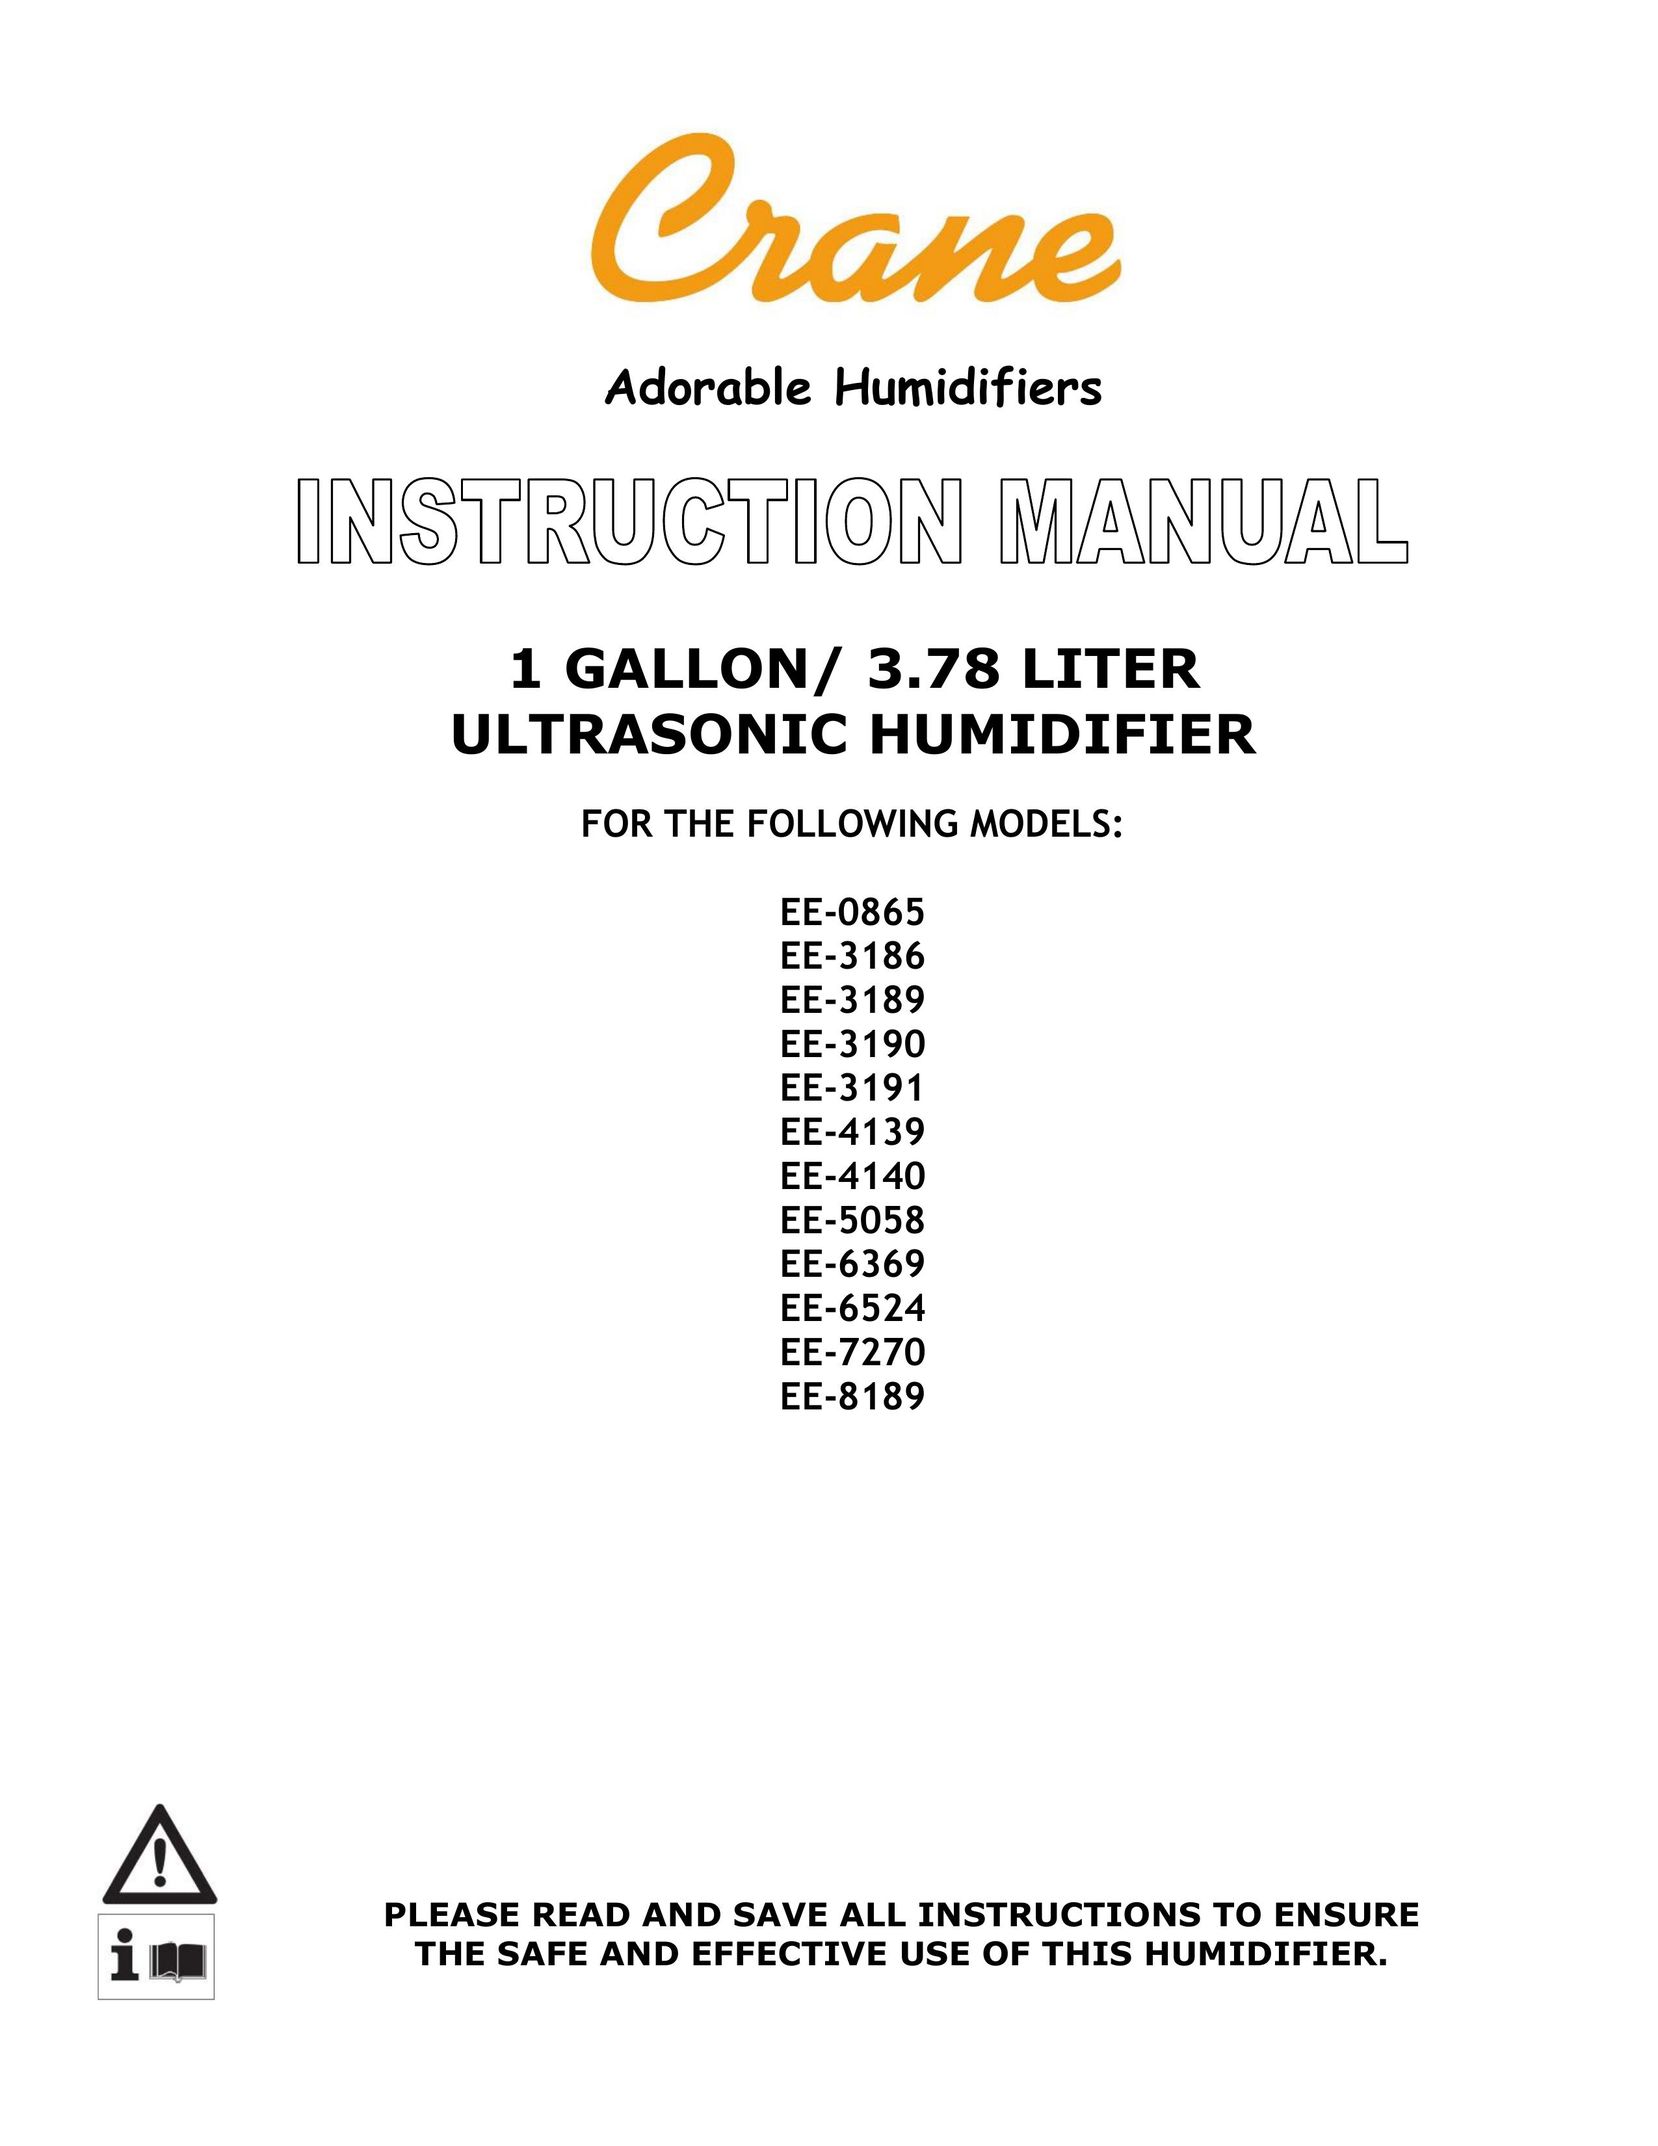 Crane EE-4139 Humidifier User Manual